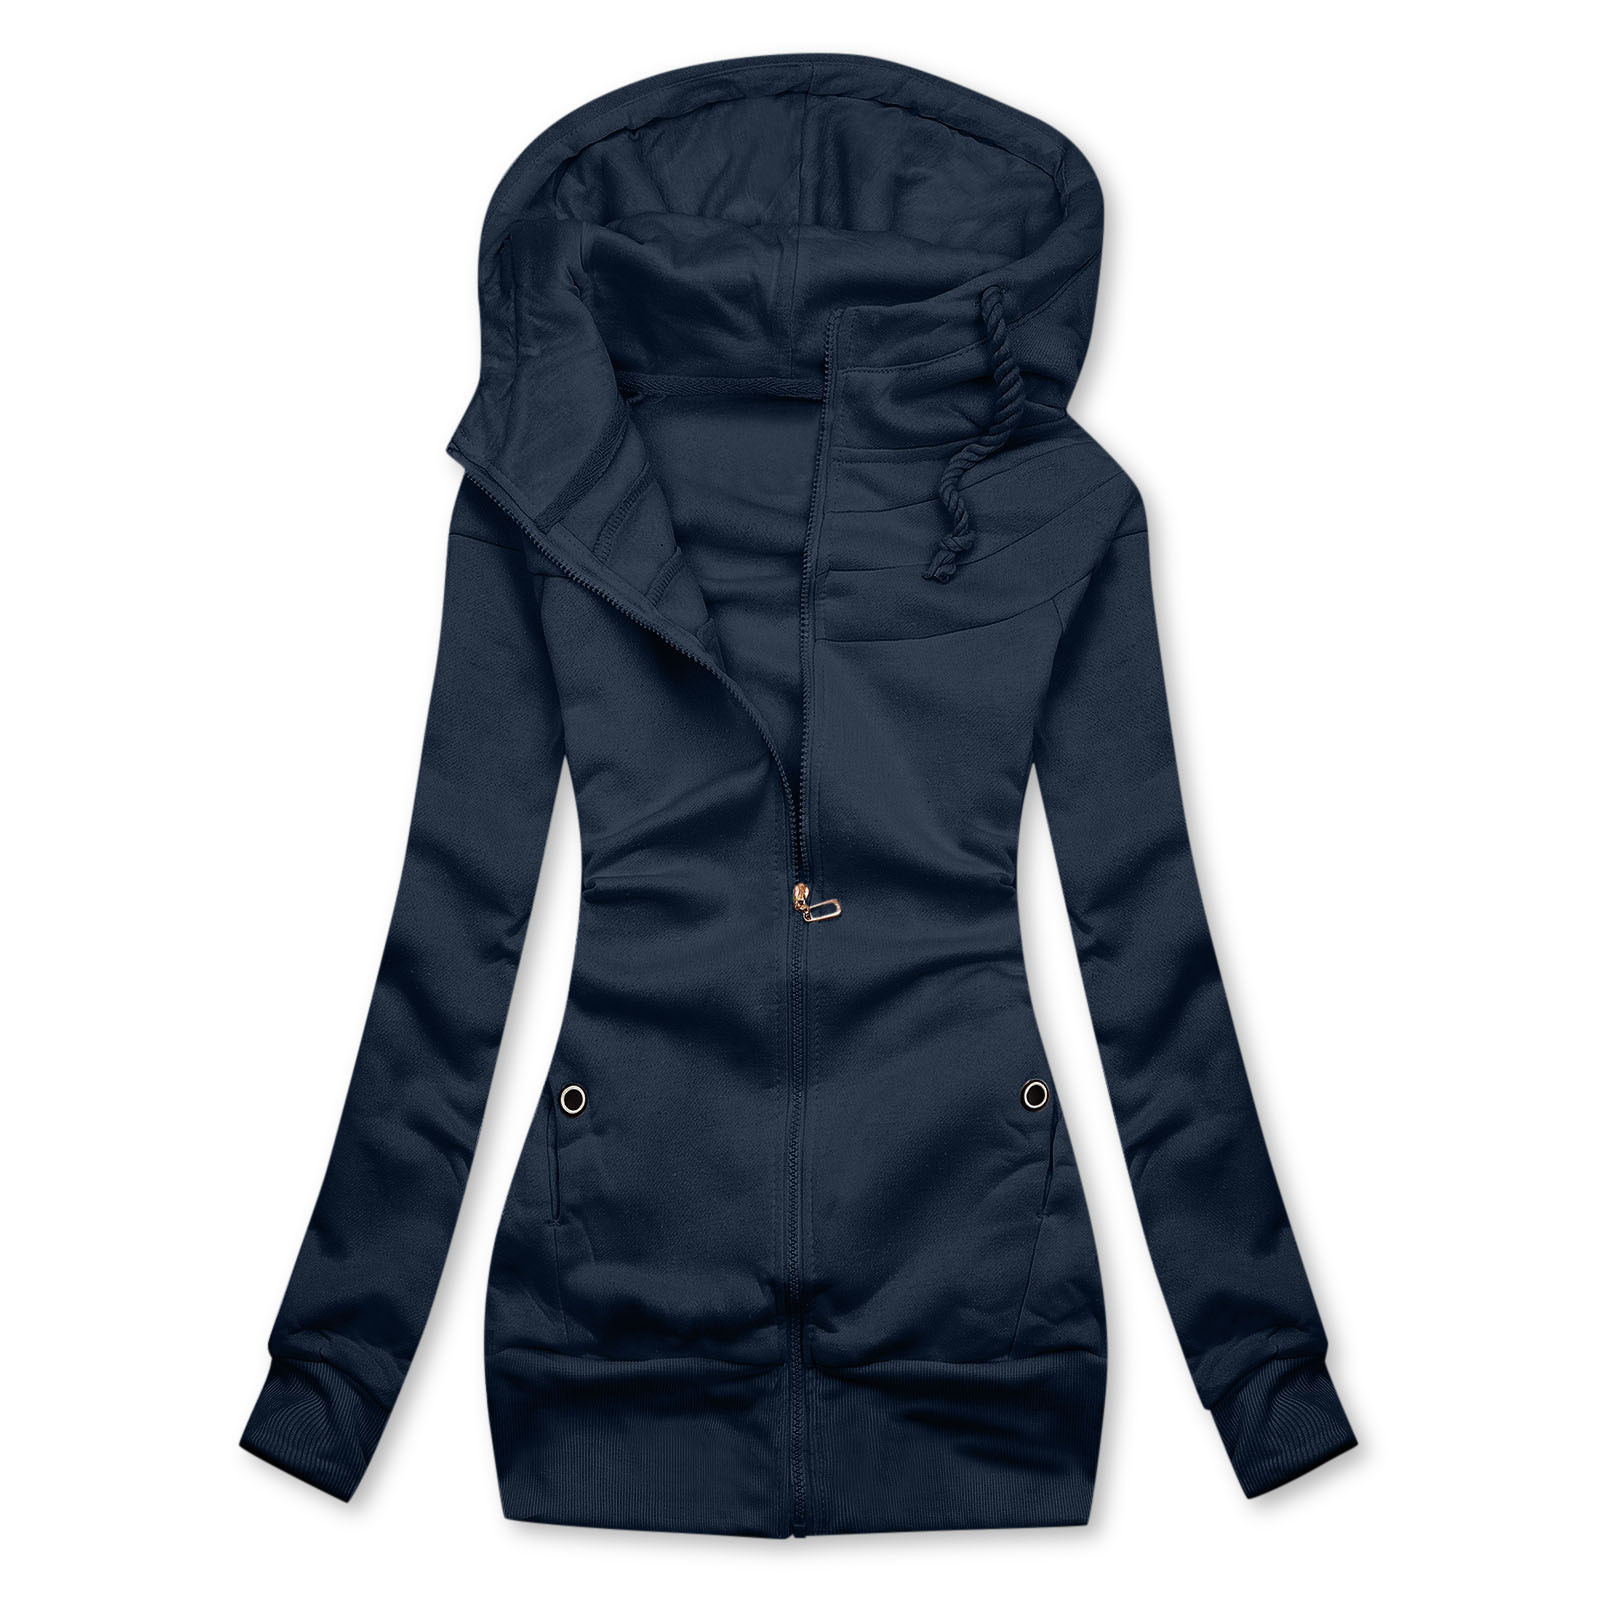 Womens Full-Zip Jackets Hoodies Long Sleeve Mid-length Sweatshirt Tunic Print Hooded Coat with Thumb Holes - image 2 of 3